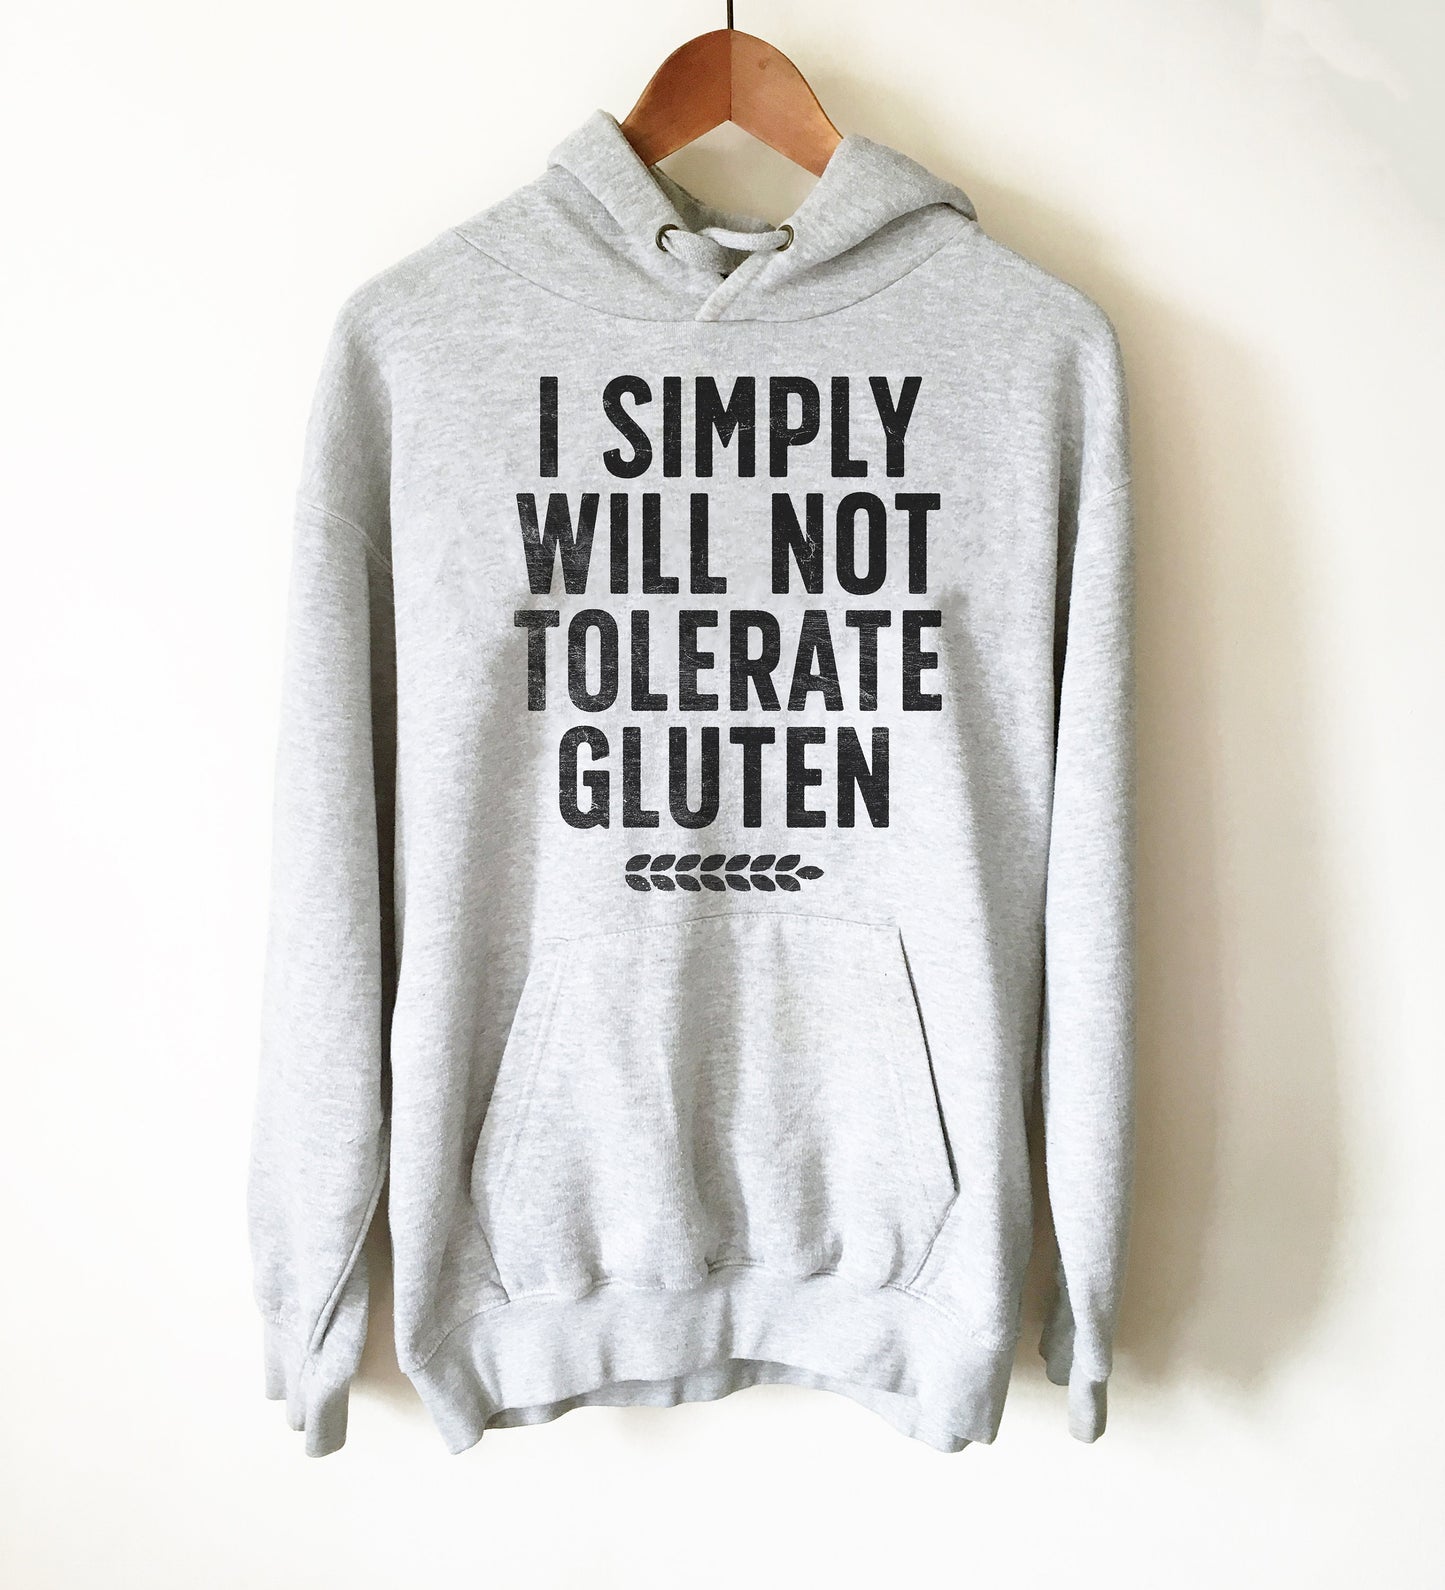 I Simply Will Not Tolerate Gluten Hoodie - Gluten Free Shirt, Gluten Free Gift, Celiac, Low Carb, Ketogenic Diet Shirt, Ketones Shirt